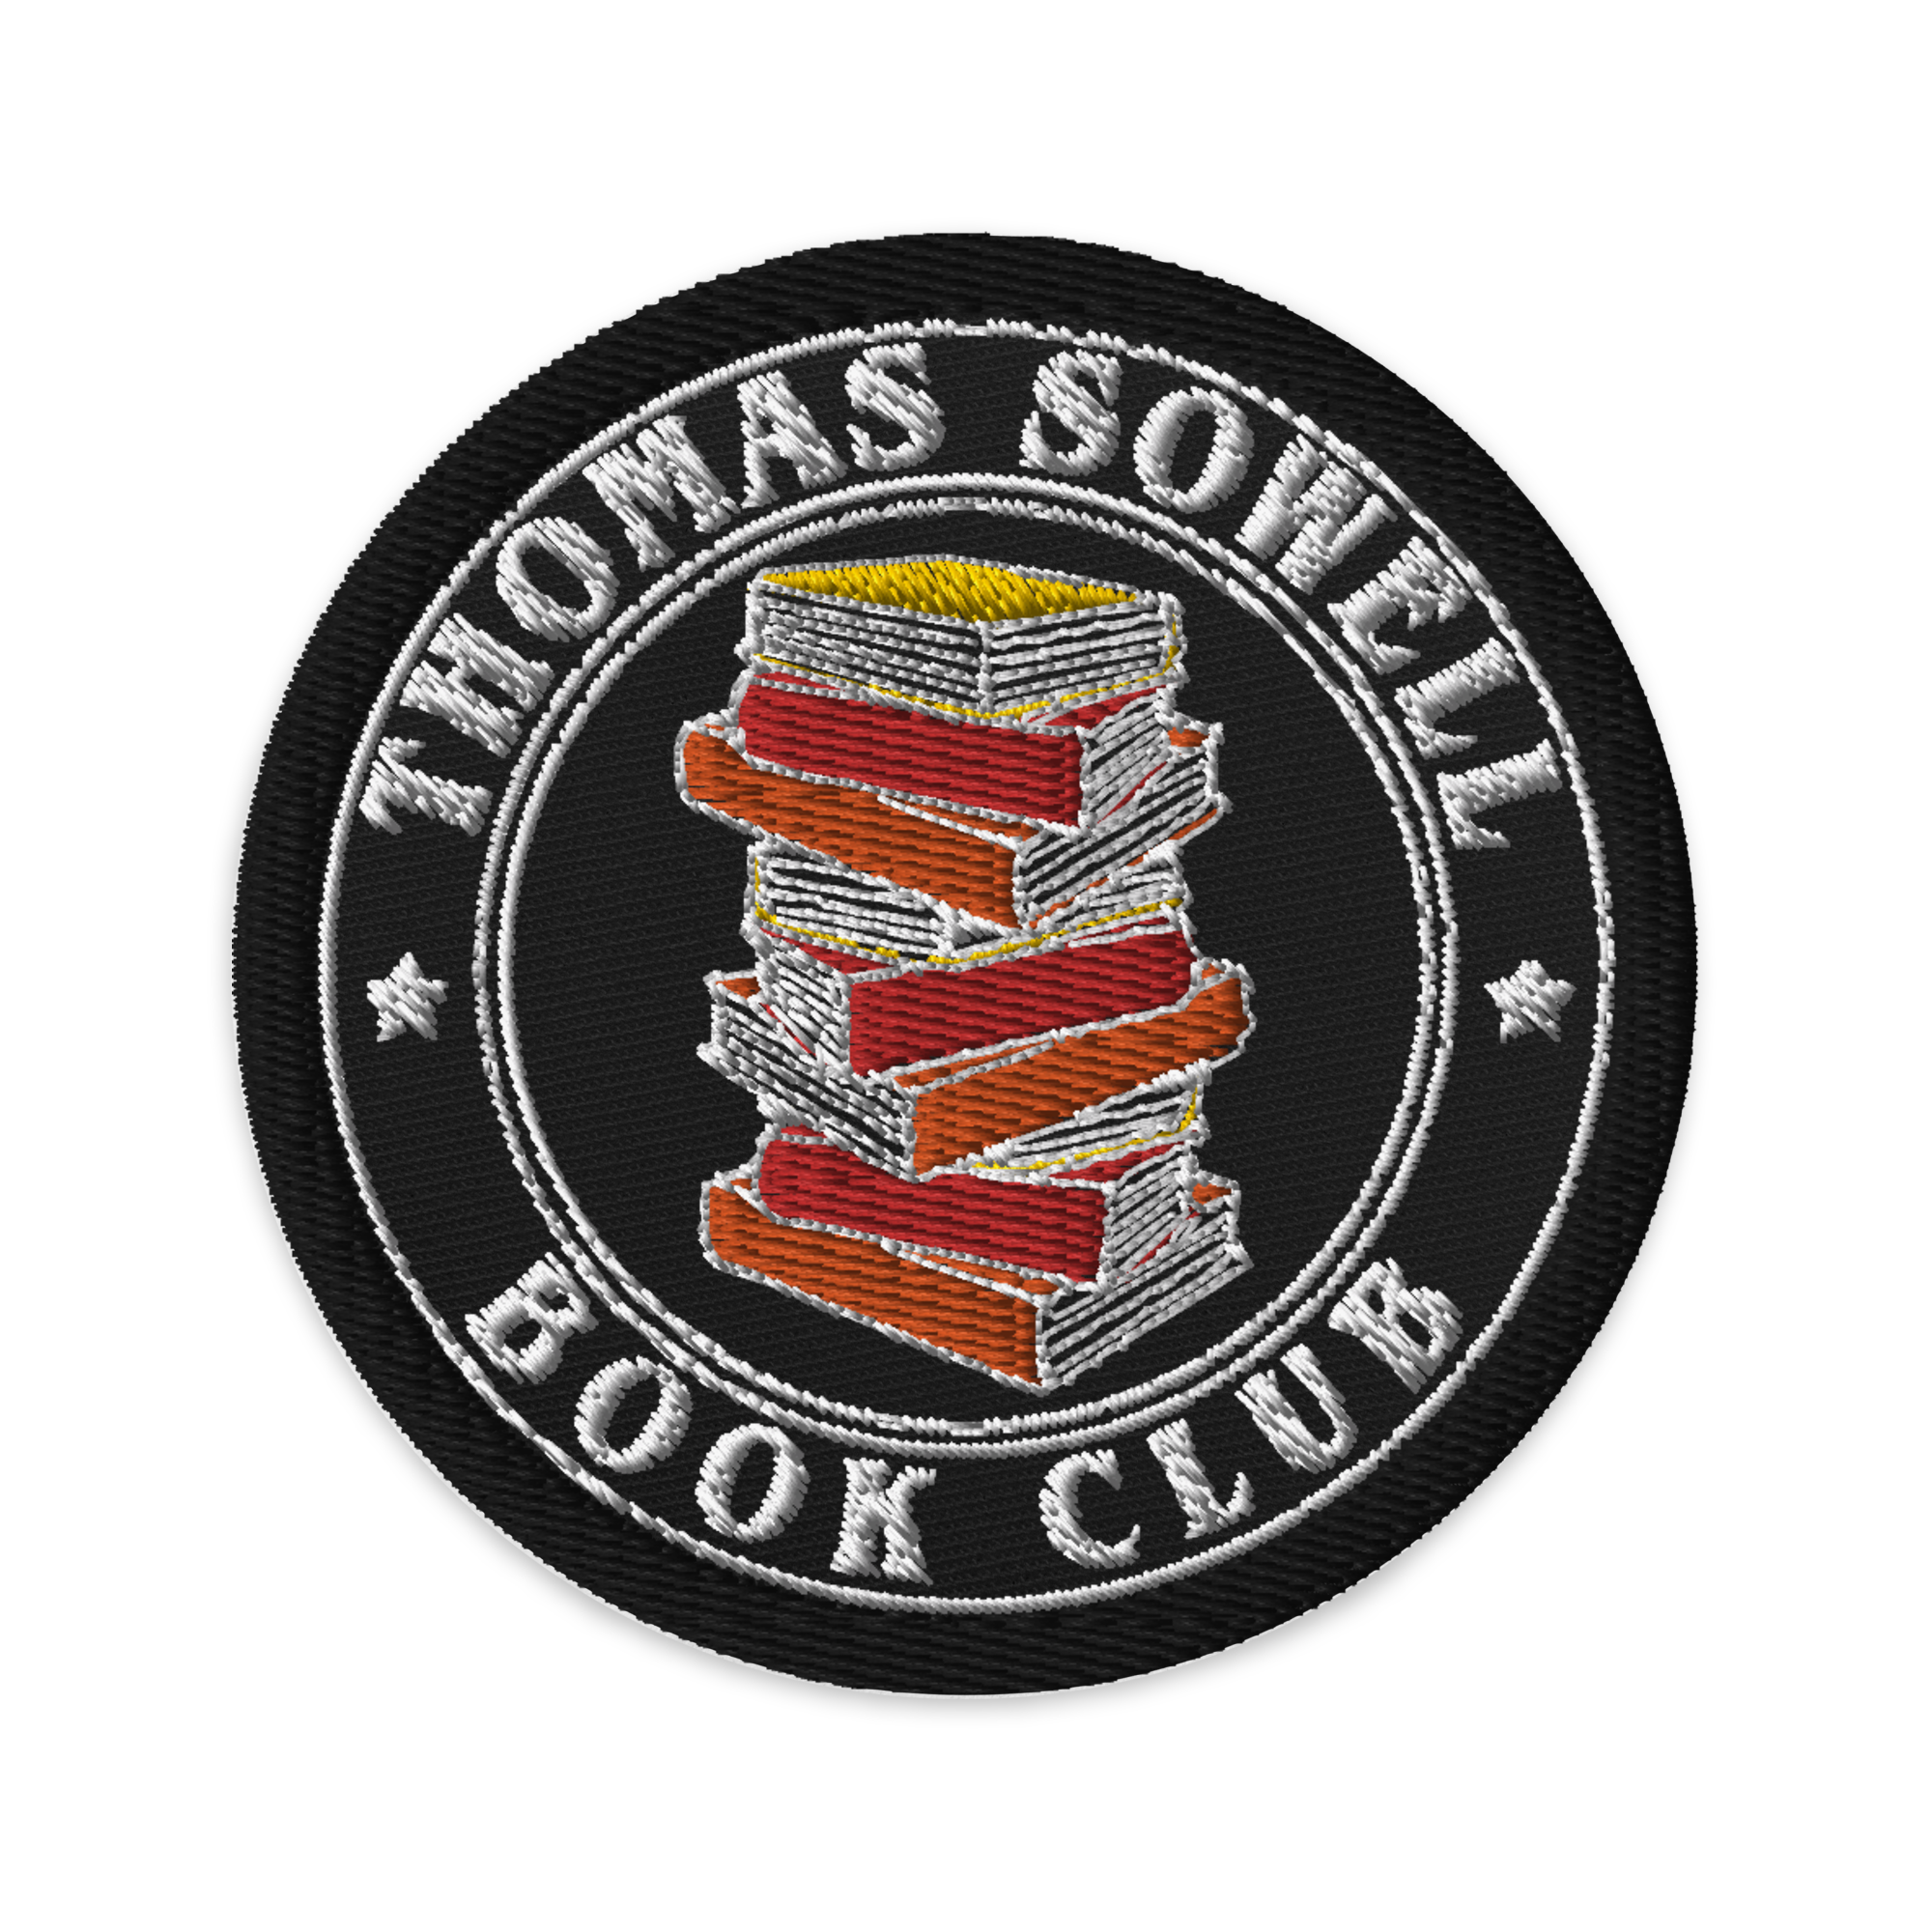 Thomas Sowell Book Club Patch